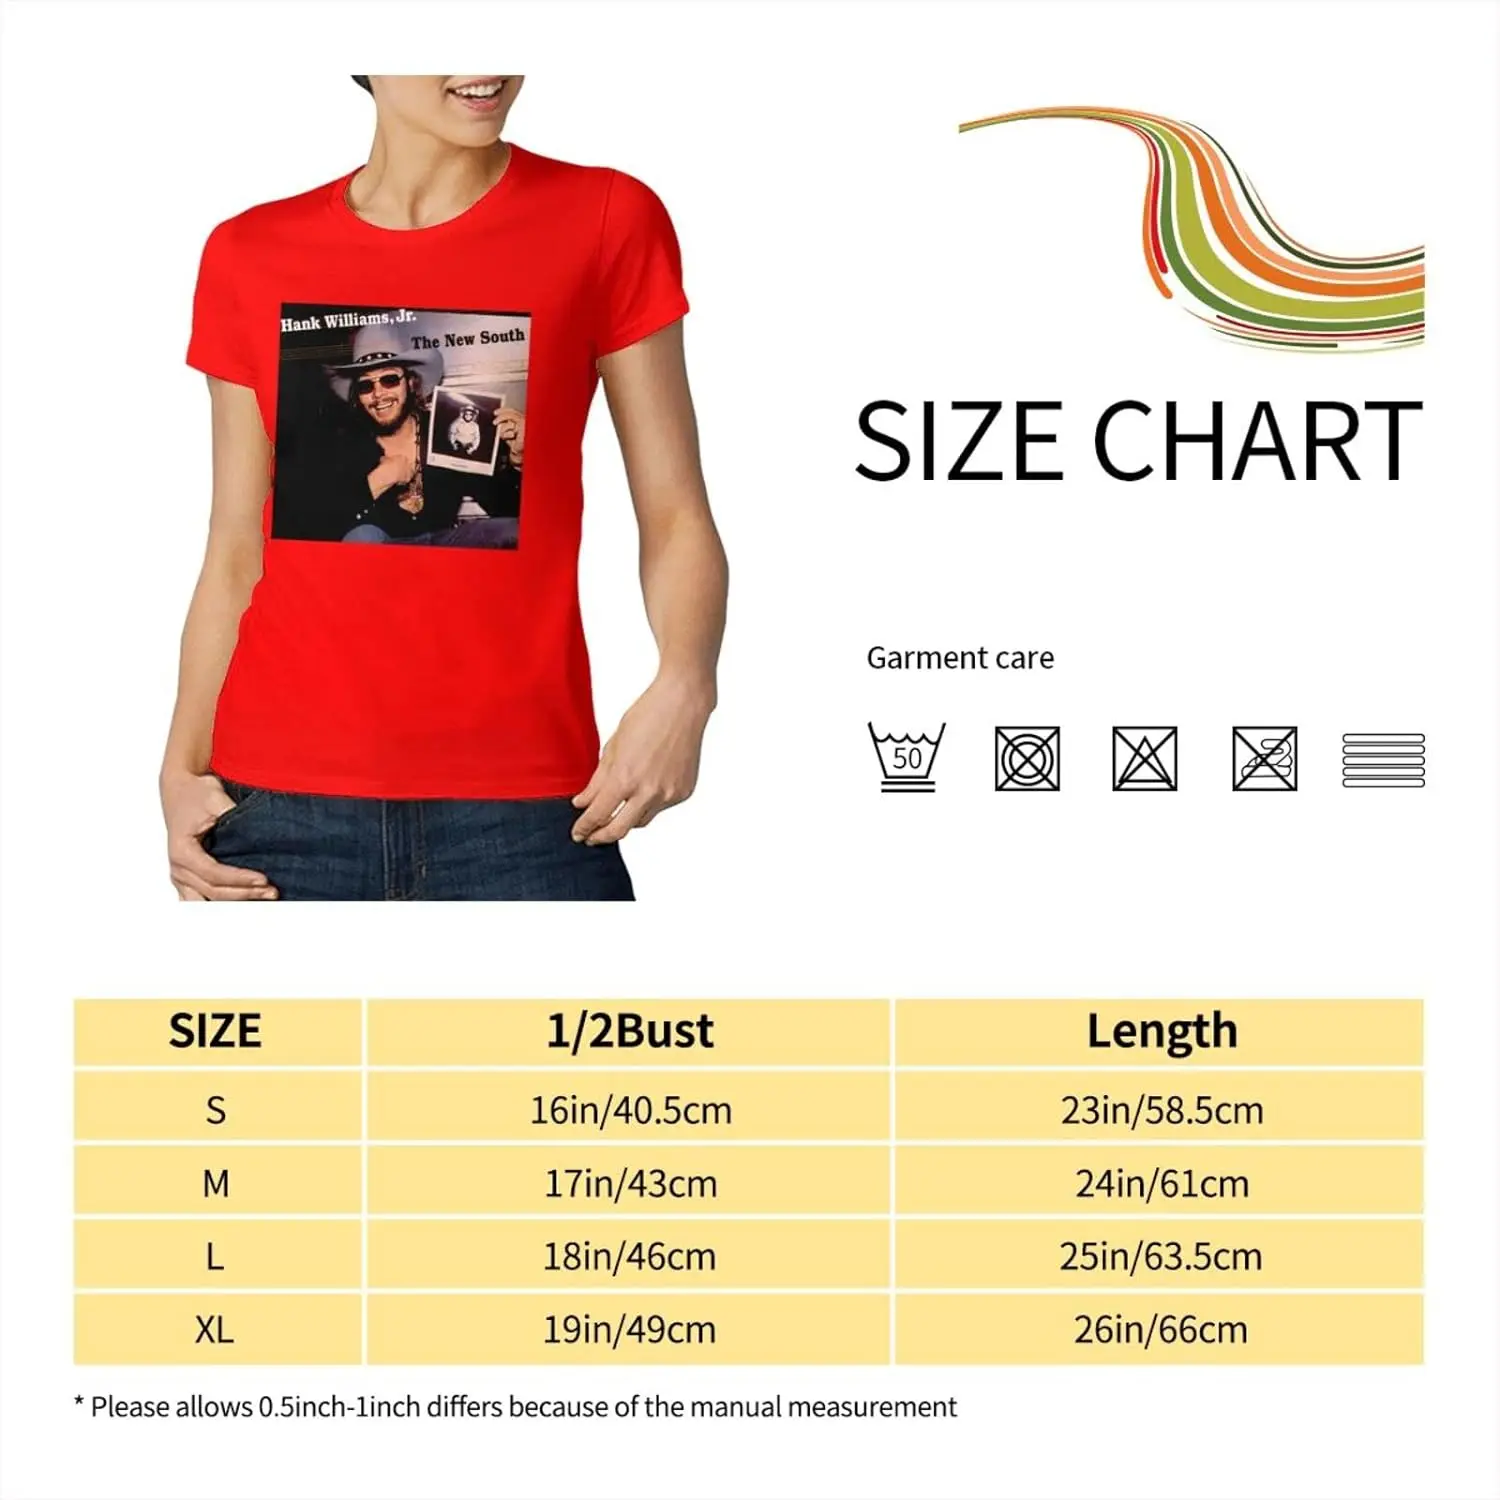 Hank Music Williams Jr Women's Classic Shirt Cotton Crew Neck Casual Top Short Sleeve T-Shirt Black images - 6